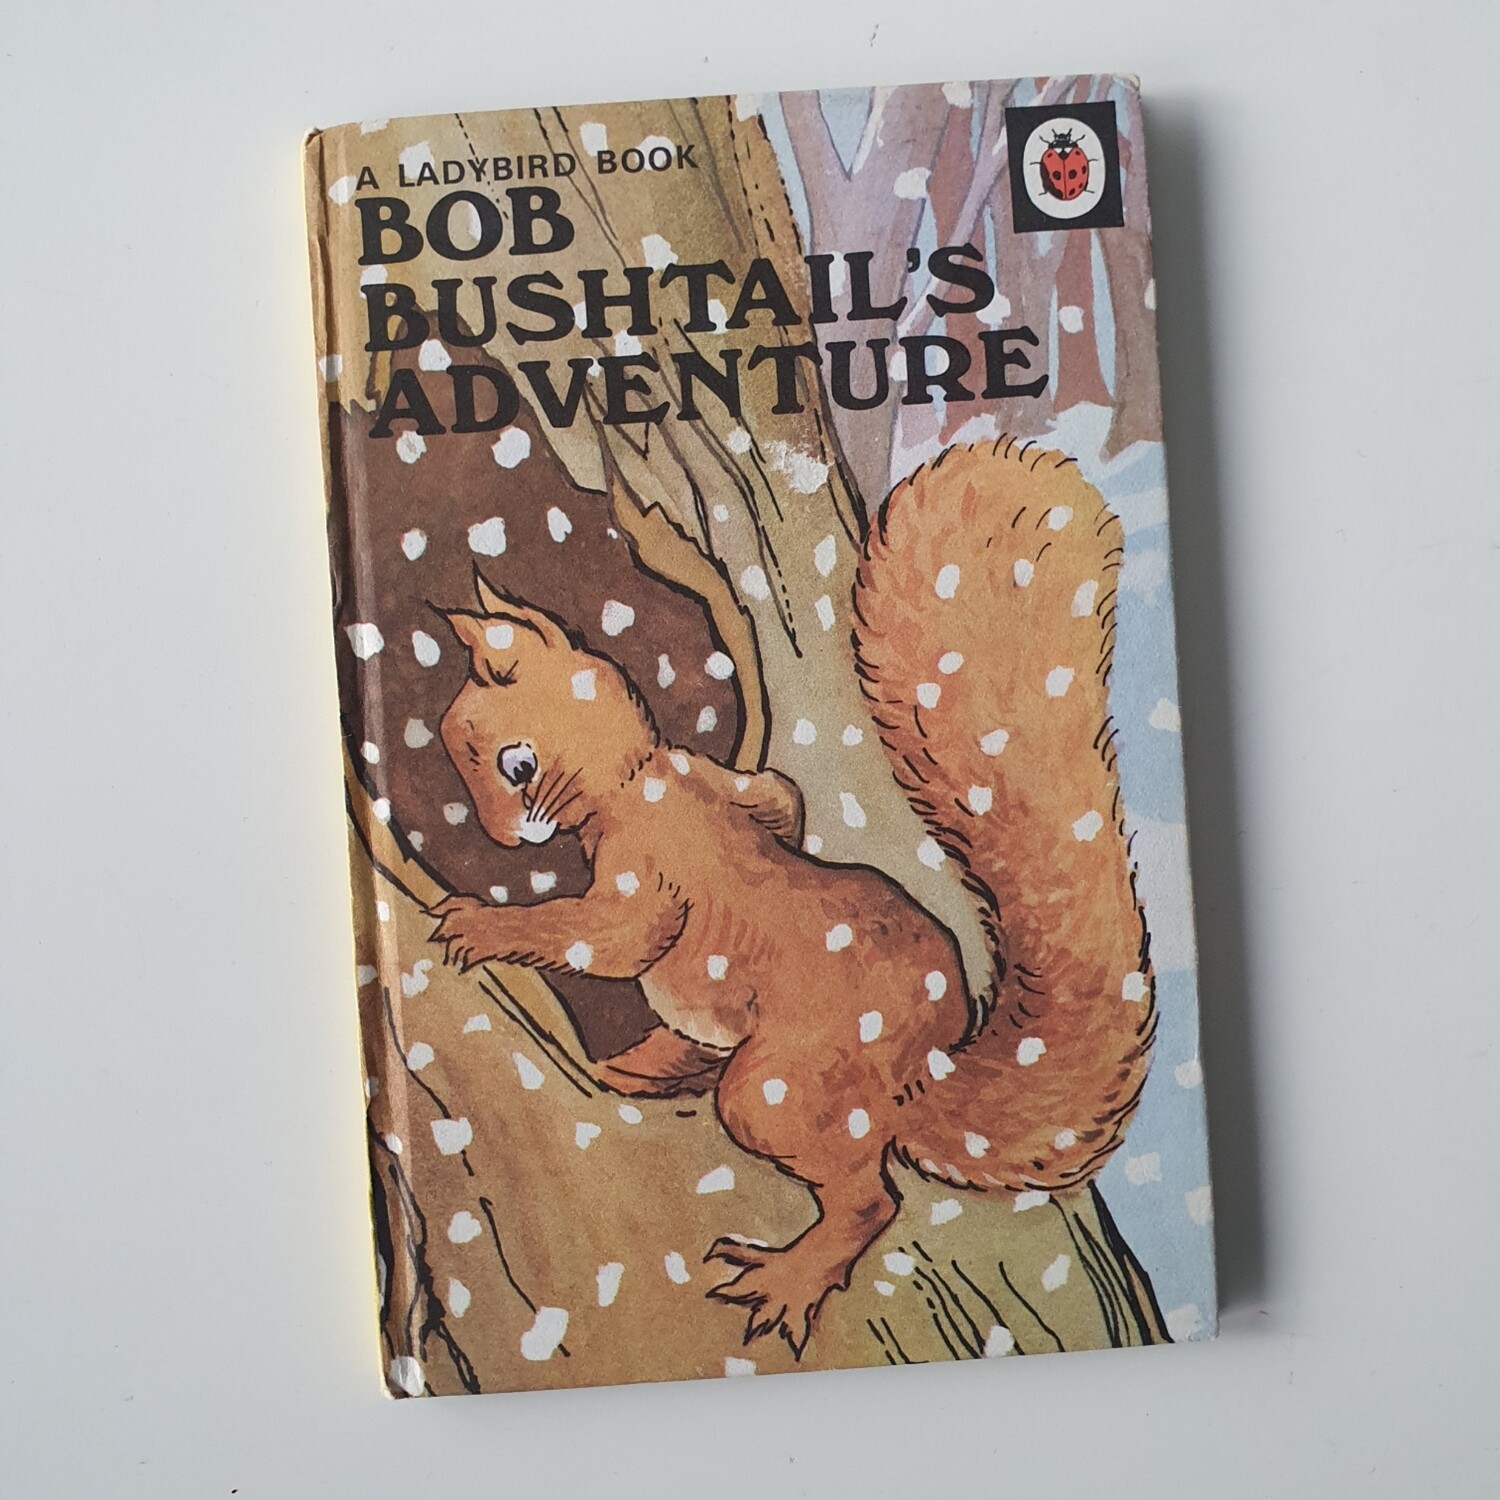 Bob Bushtail's Adventure Notebook - Ladybird book , squirrel